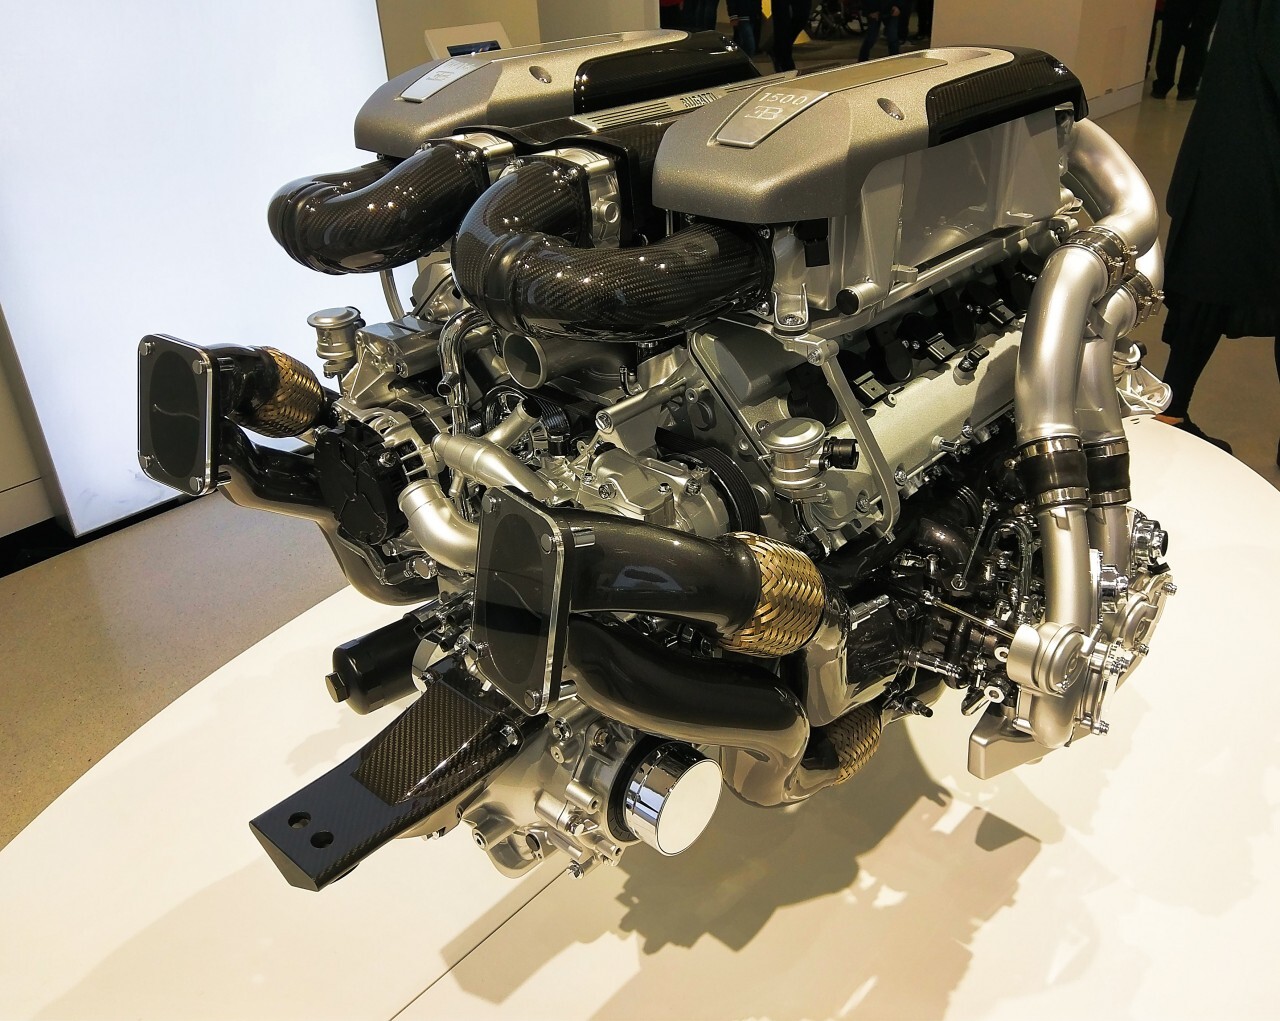 Close up shot of car engine